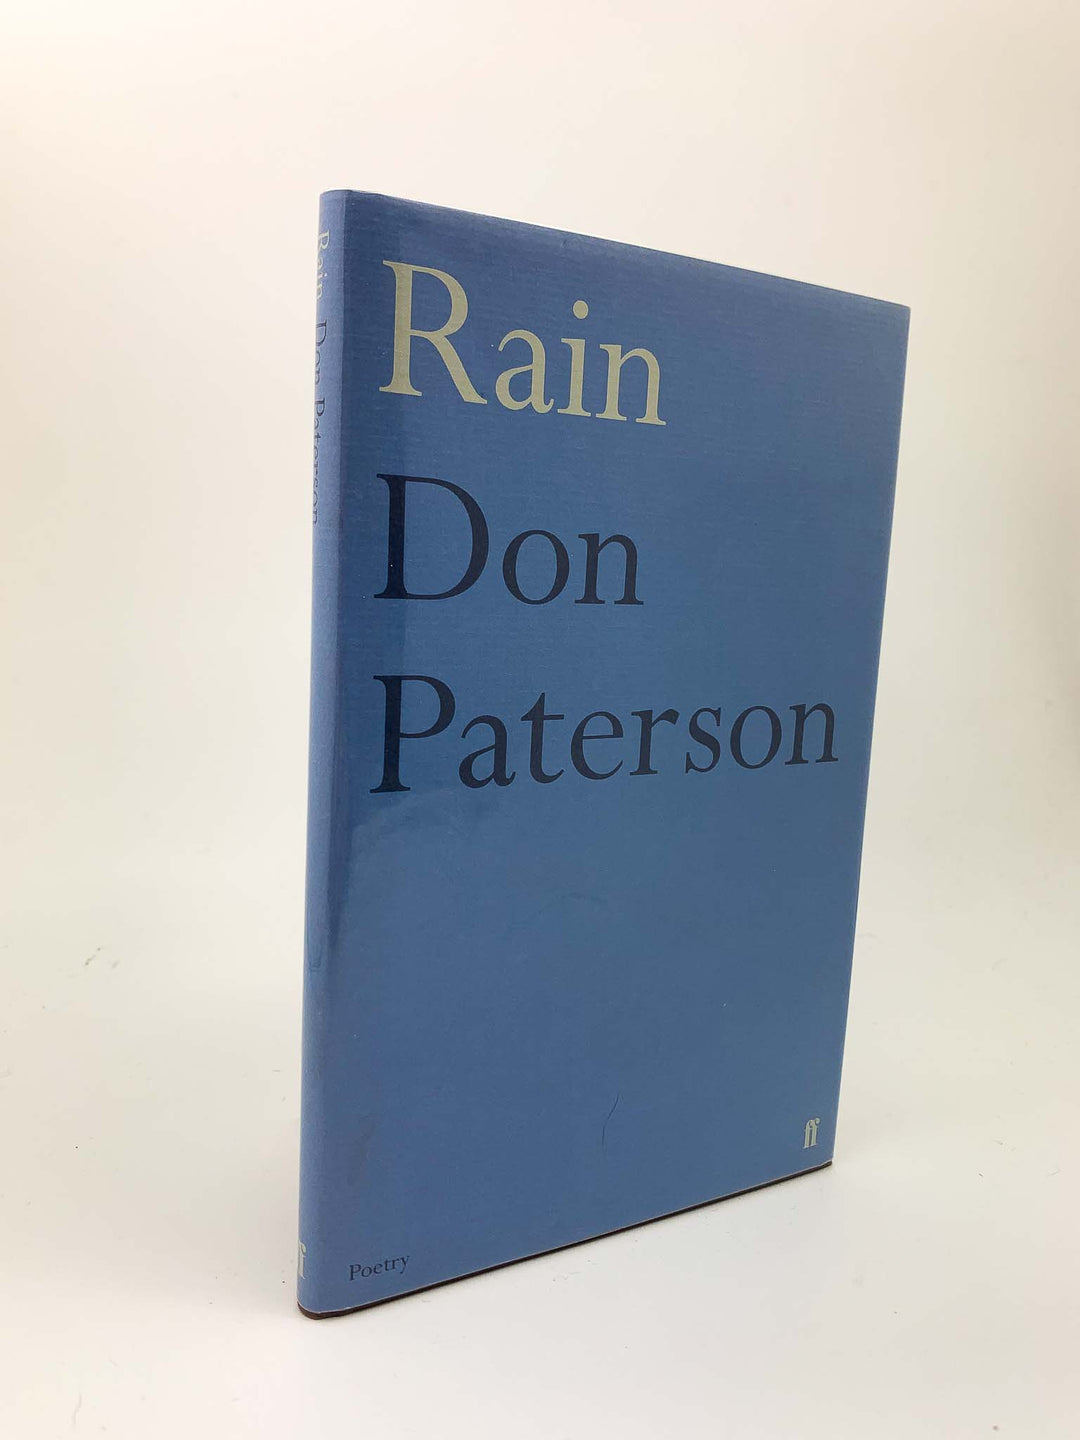 Paterson, Don - Rain | front cover